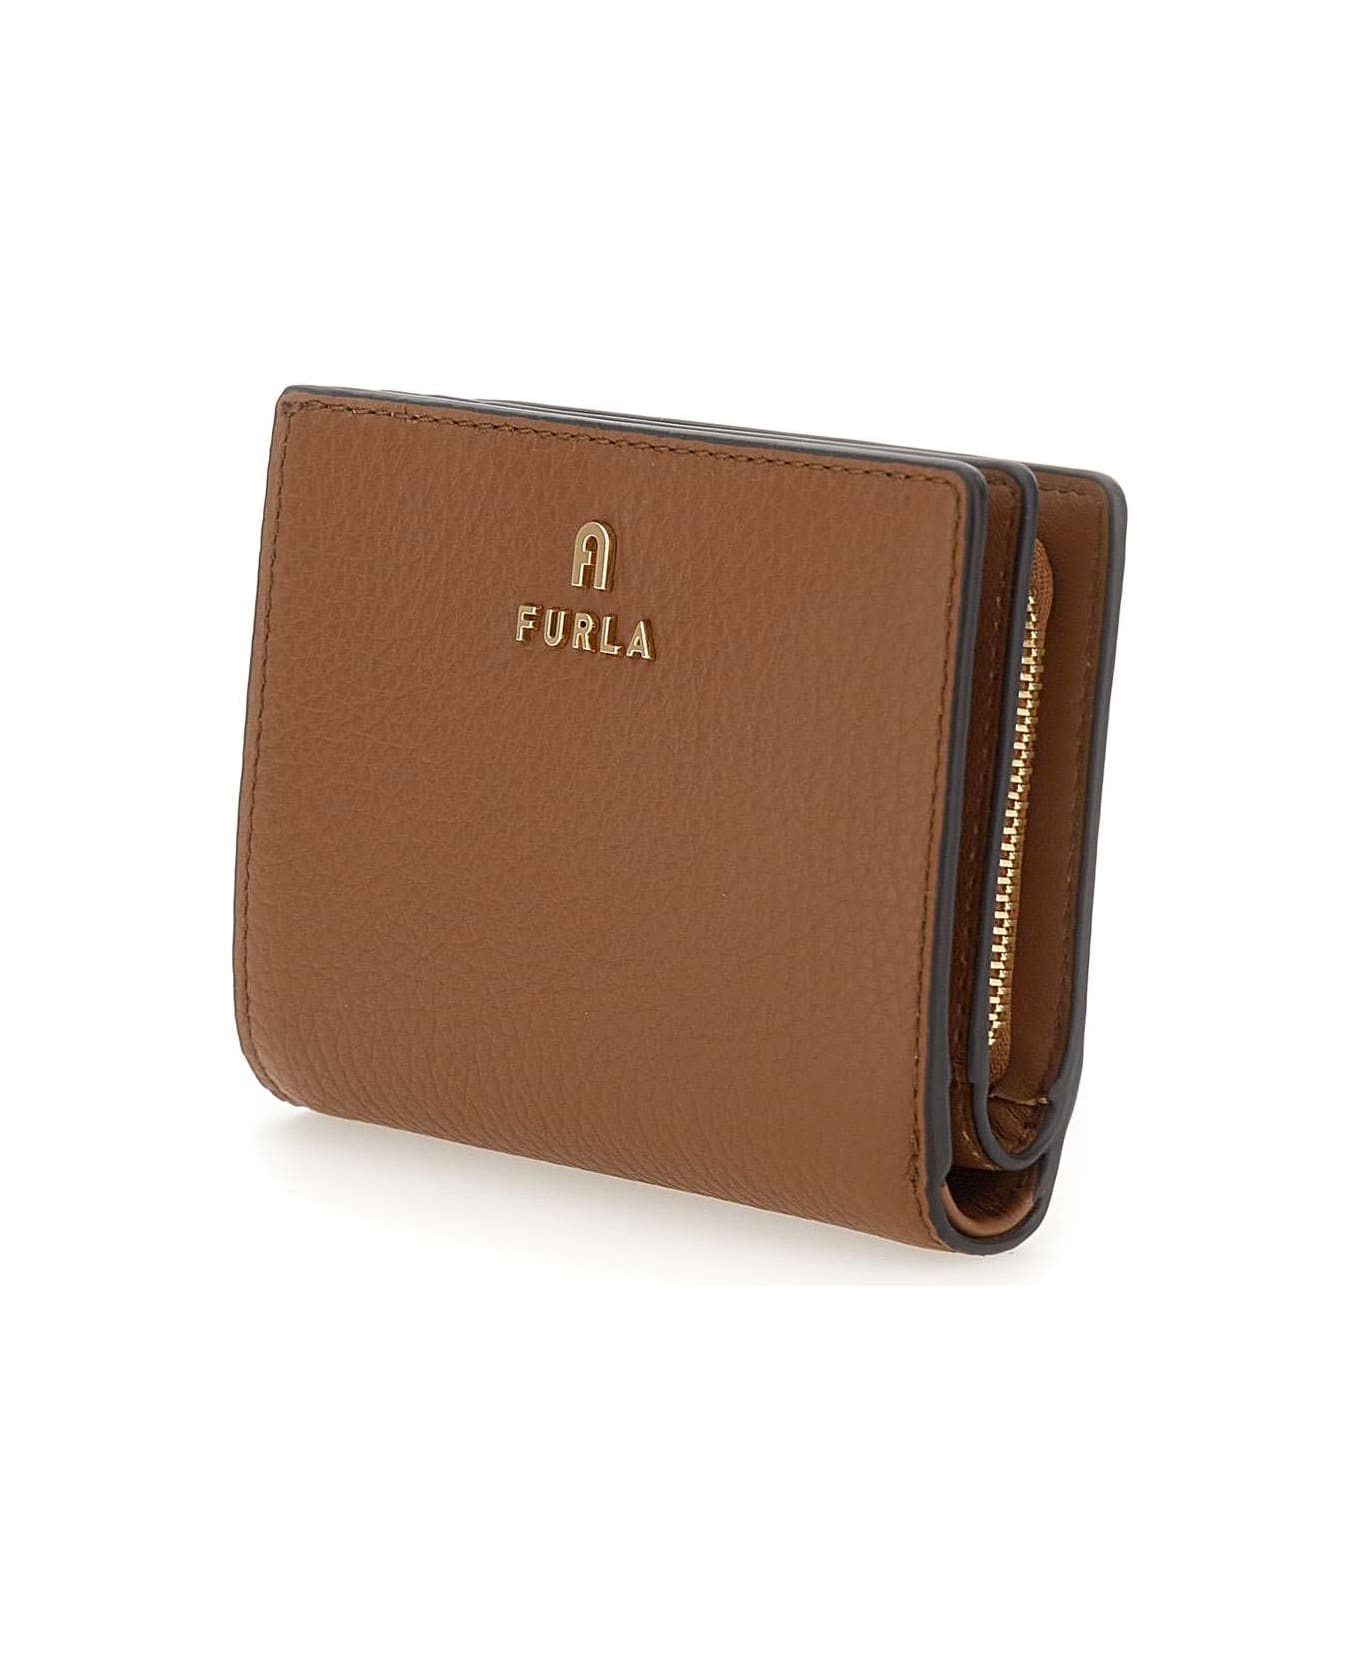 Furla 'camelia' Leather Wallet - BROWN